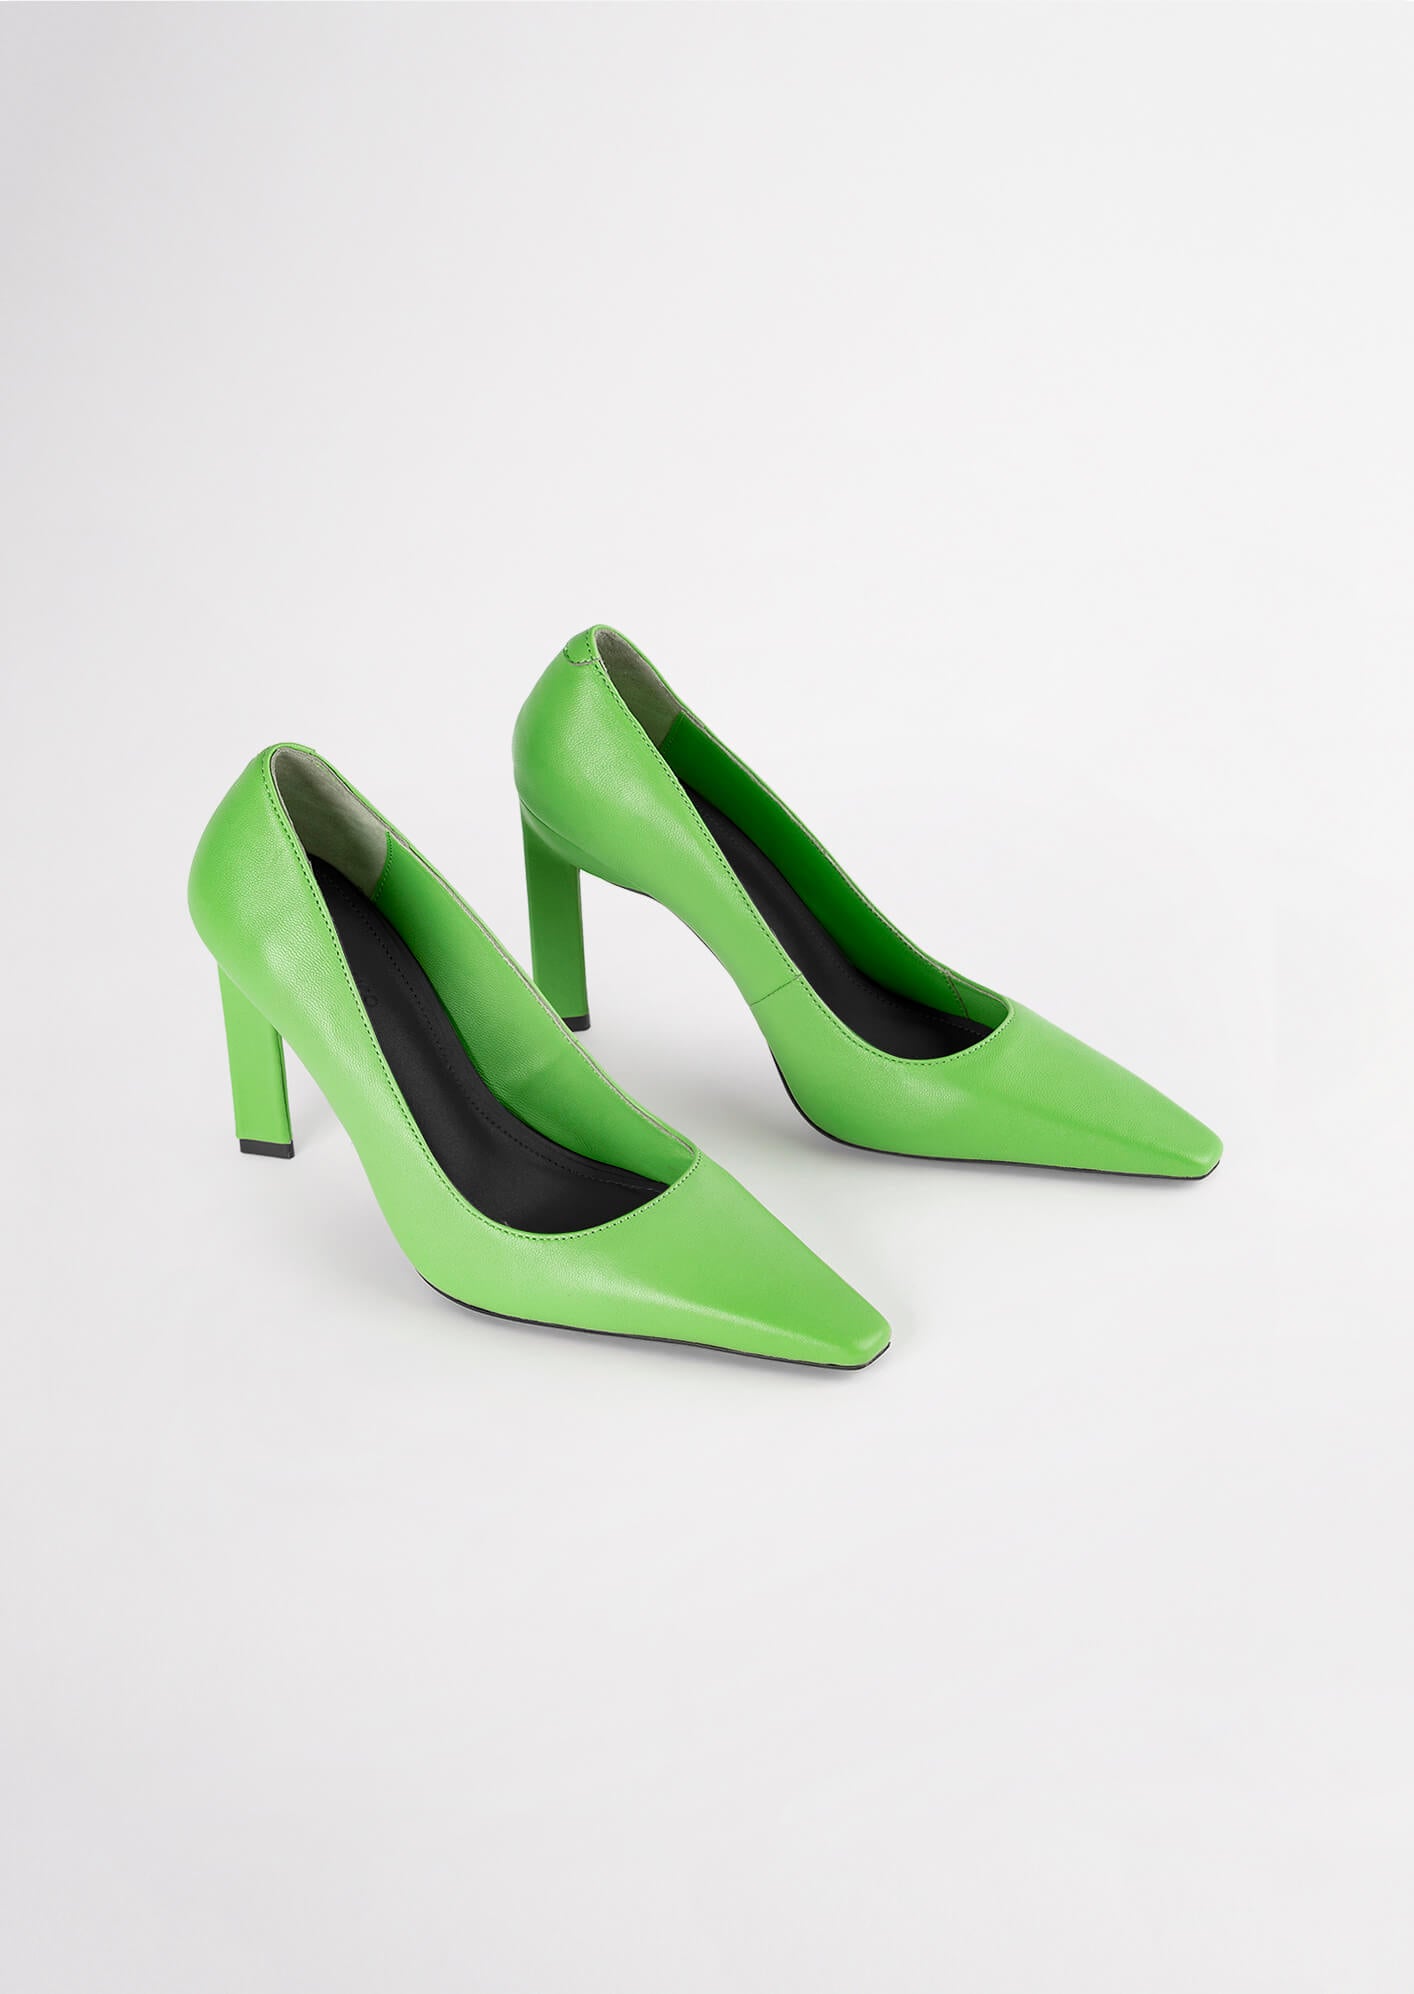 Feest Probleem Kan weerstaan Elegant Lime Nappa 10.5cm Heels | Heels | Tony Bianco USA